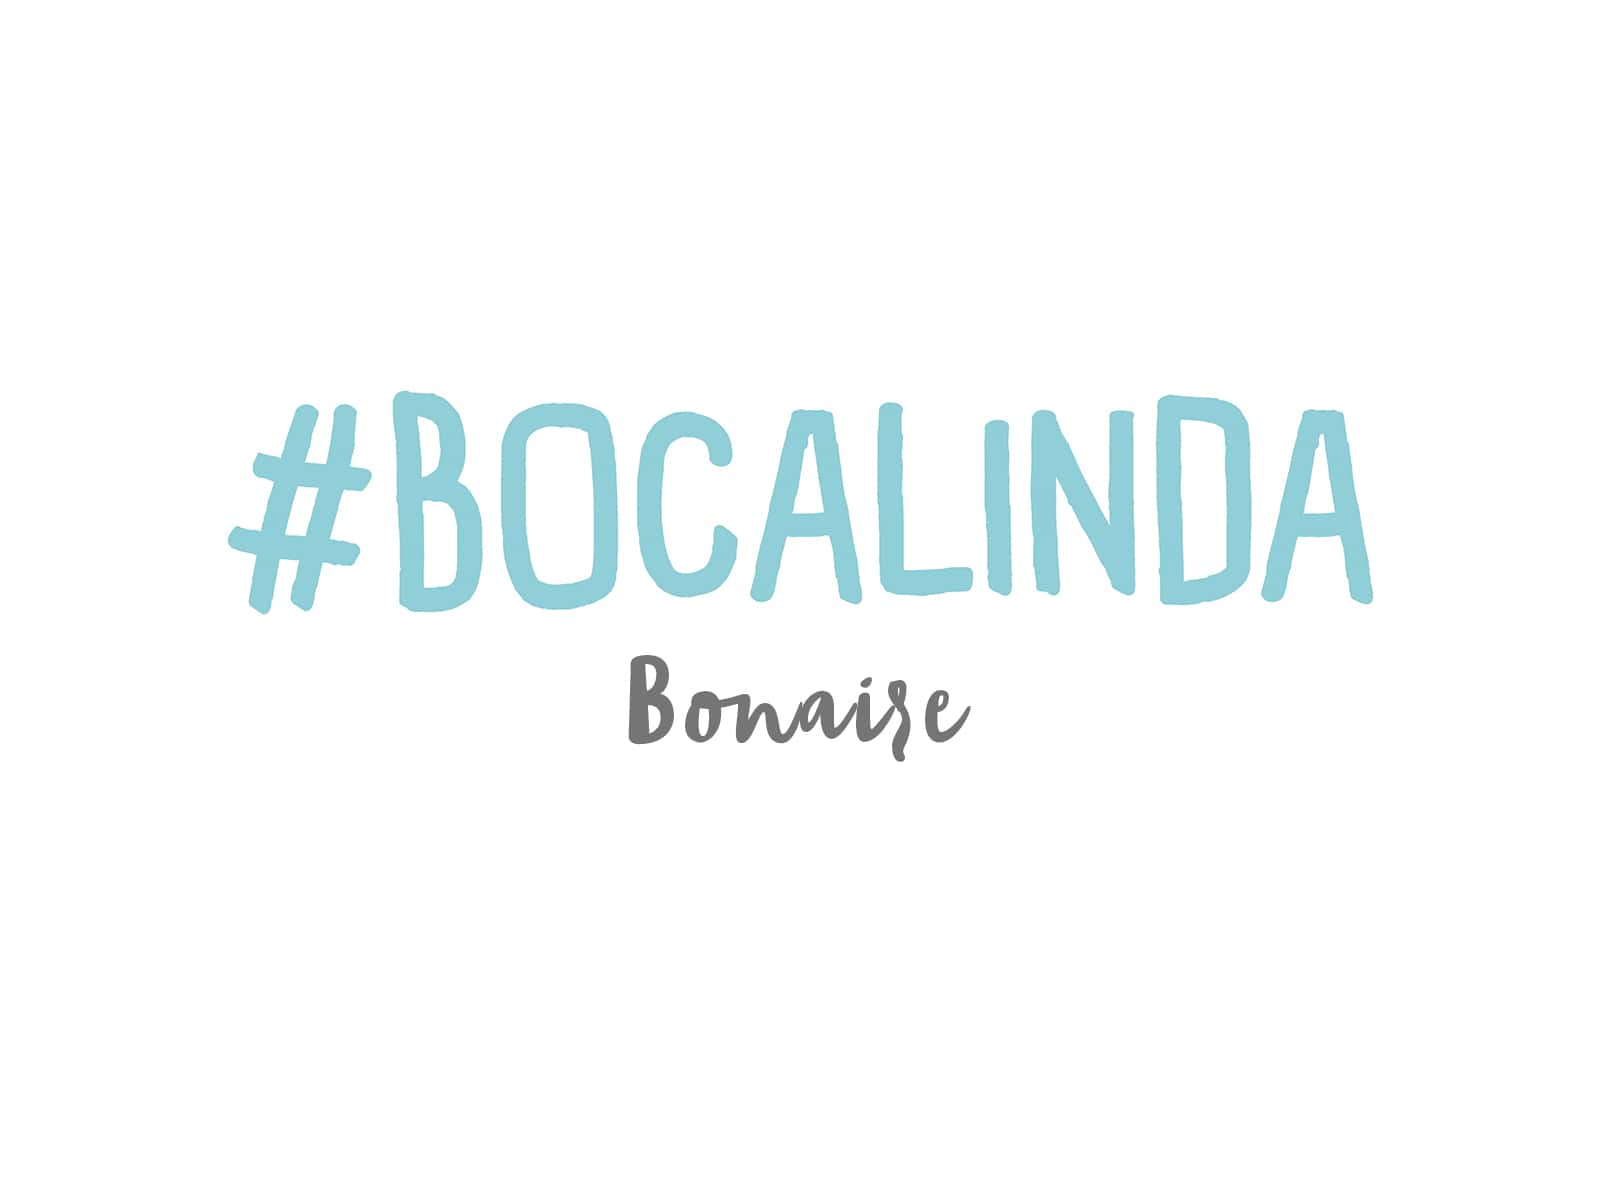 Bocalinda Bonaire